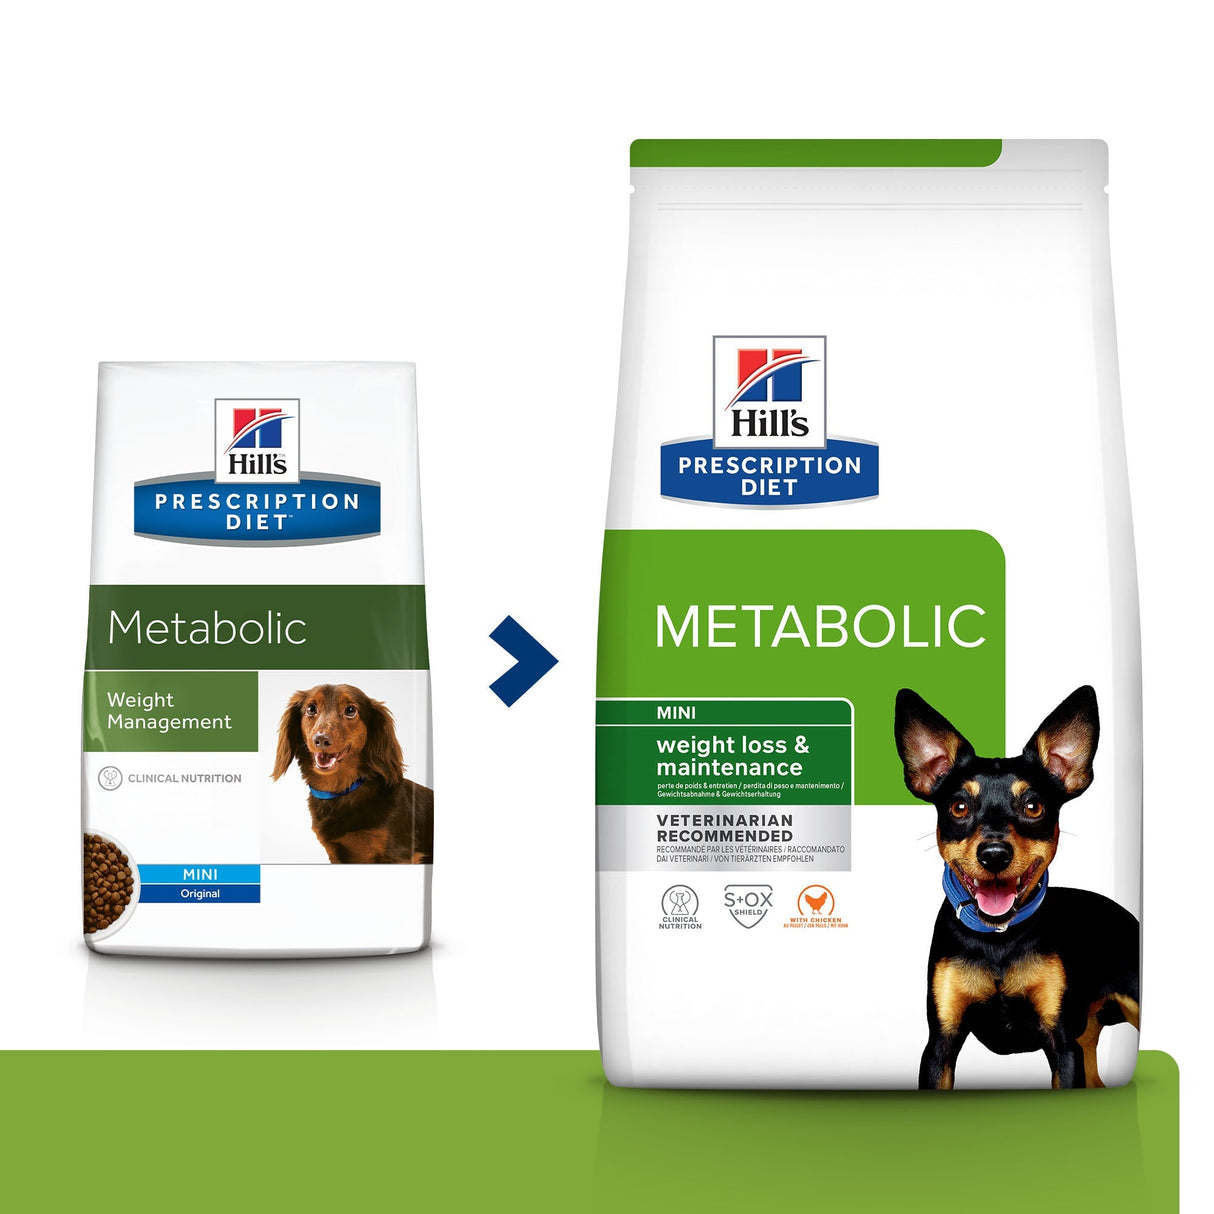 Hill's Prescription Diet Metabolic Canine Mini til vægttab